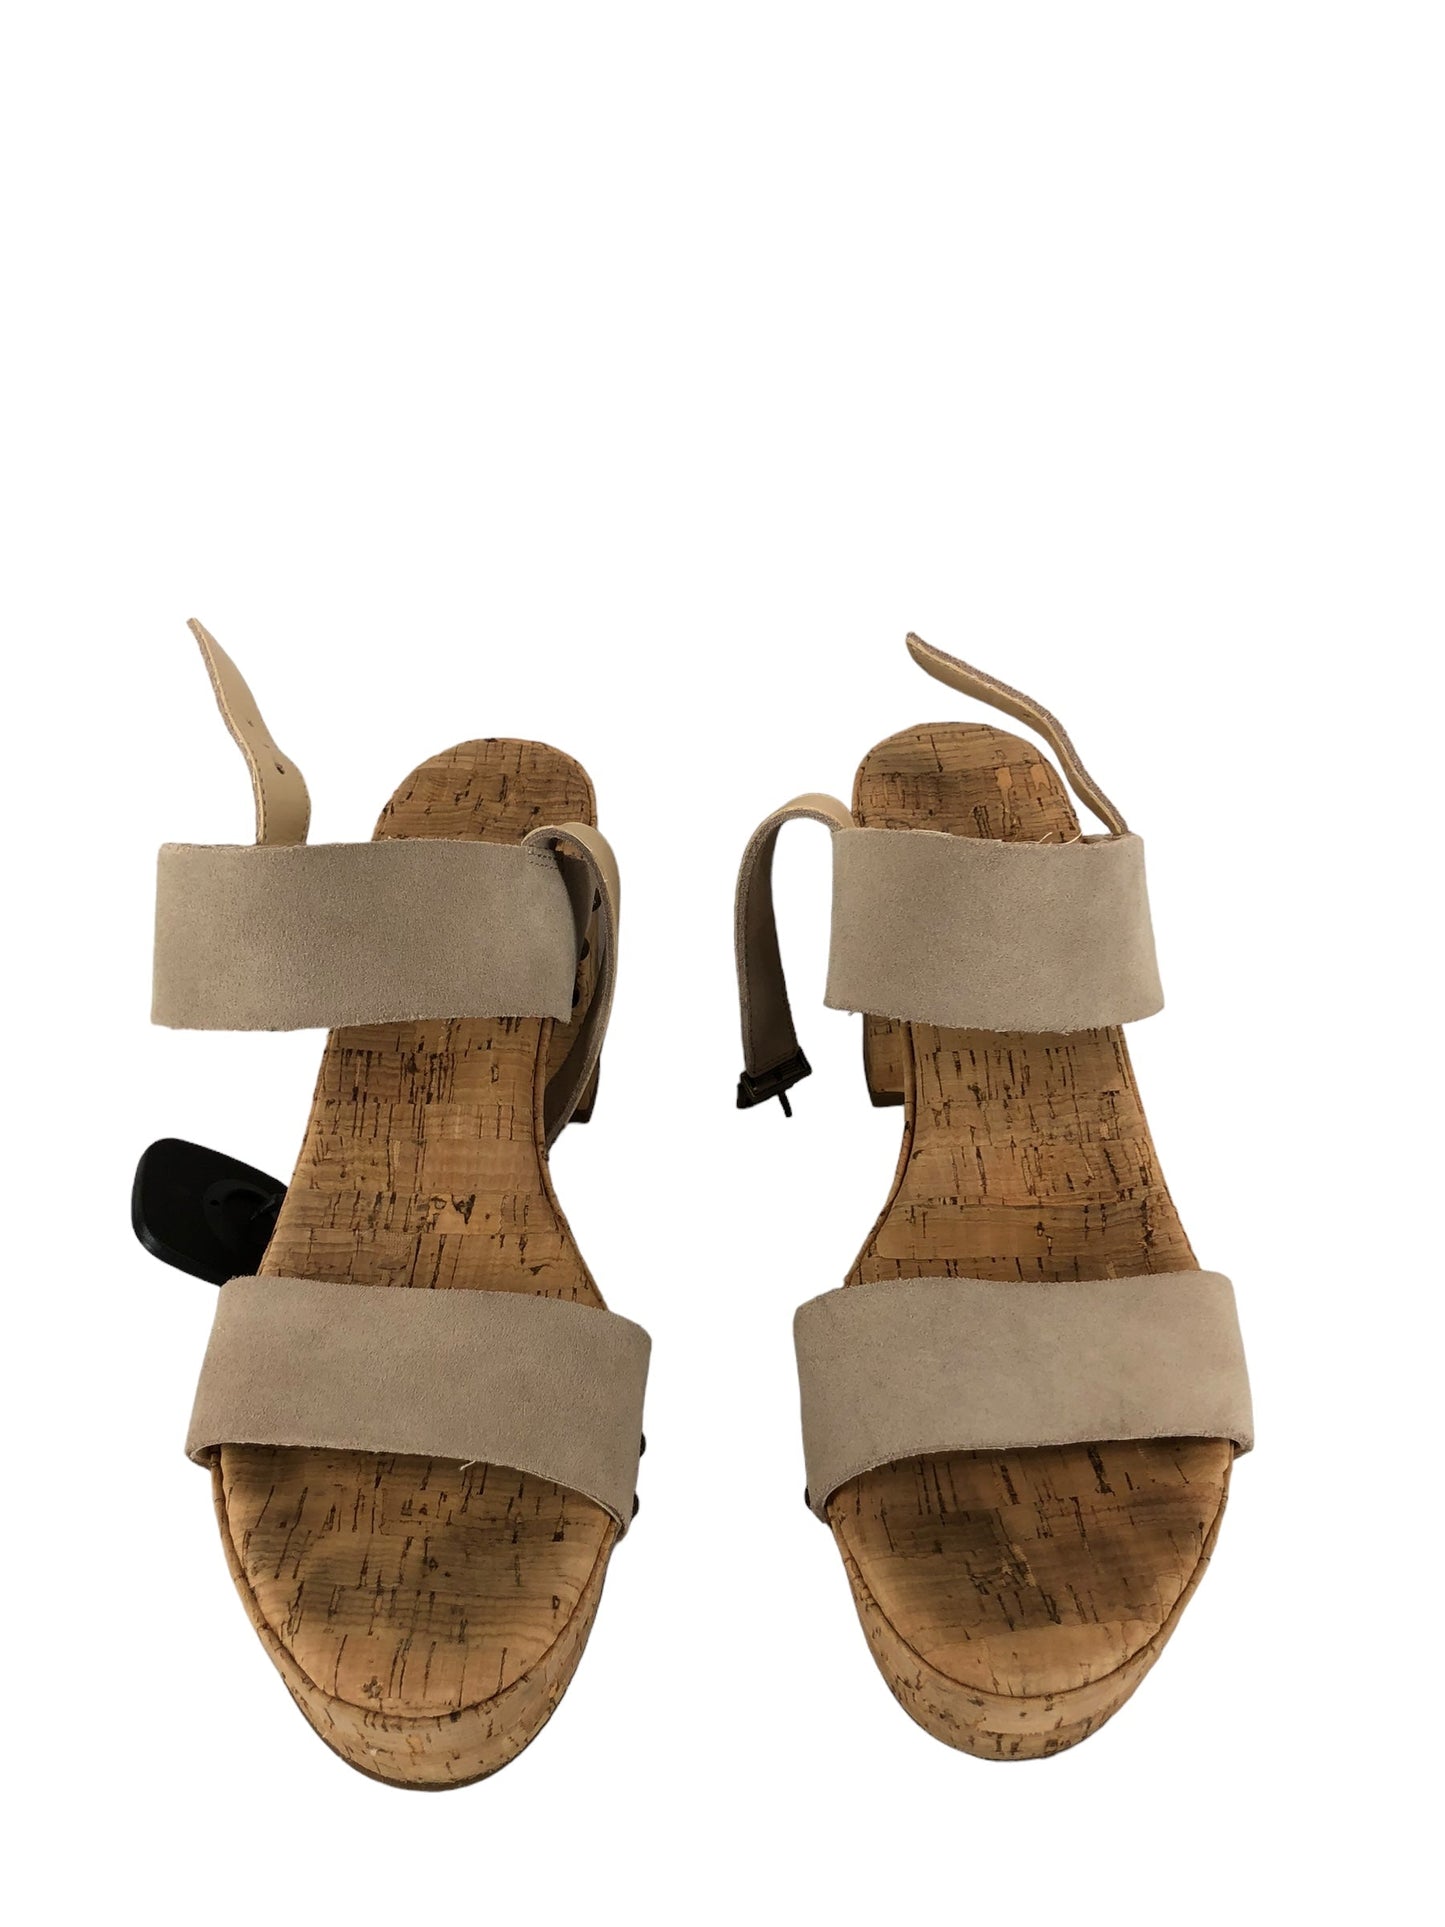 Tan Shoes Heels Platform Jessica Simpson, Size 8